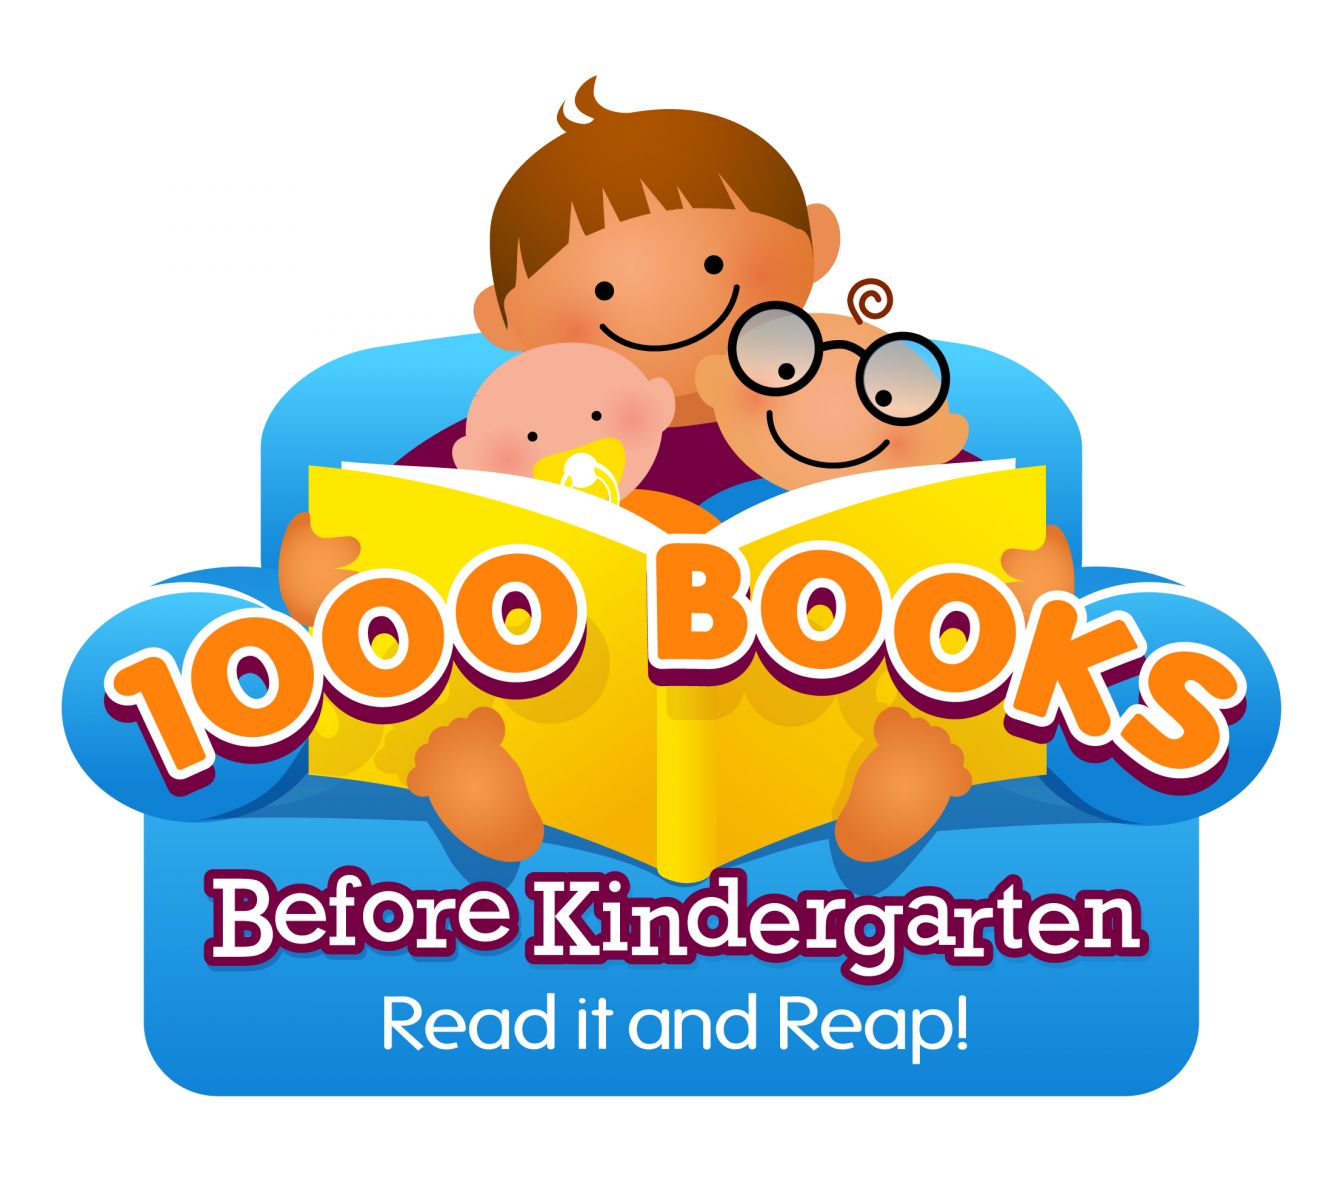 1000 Books Before Kindergarten | Camden County Library System